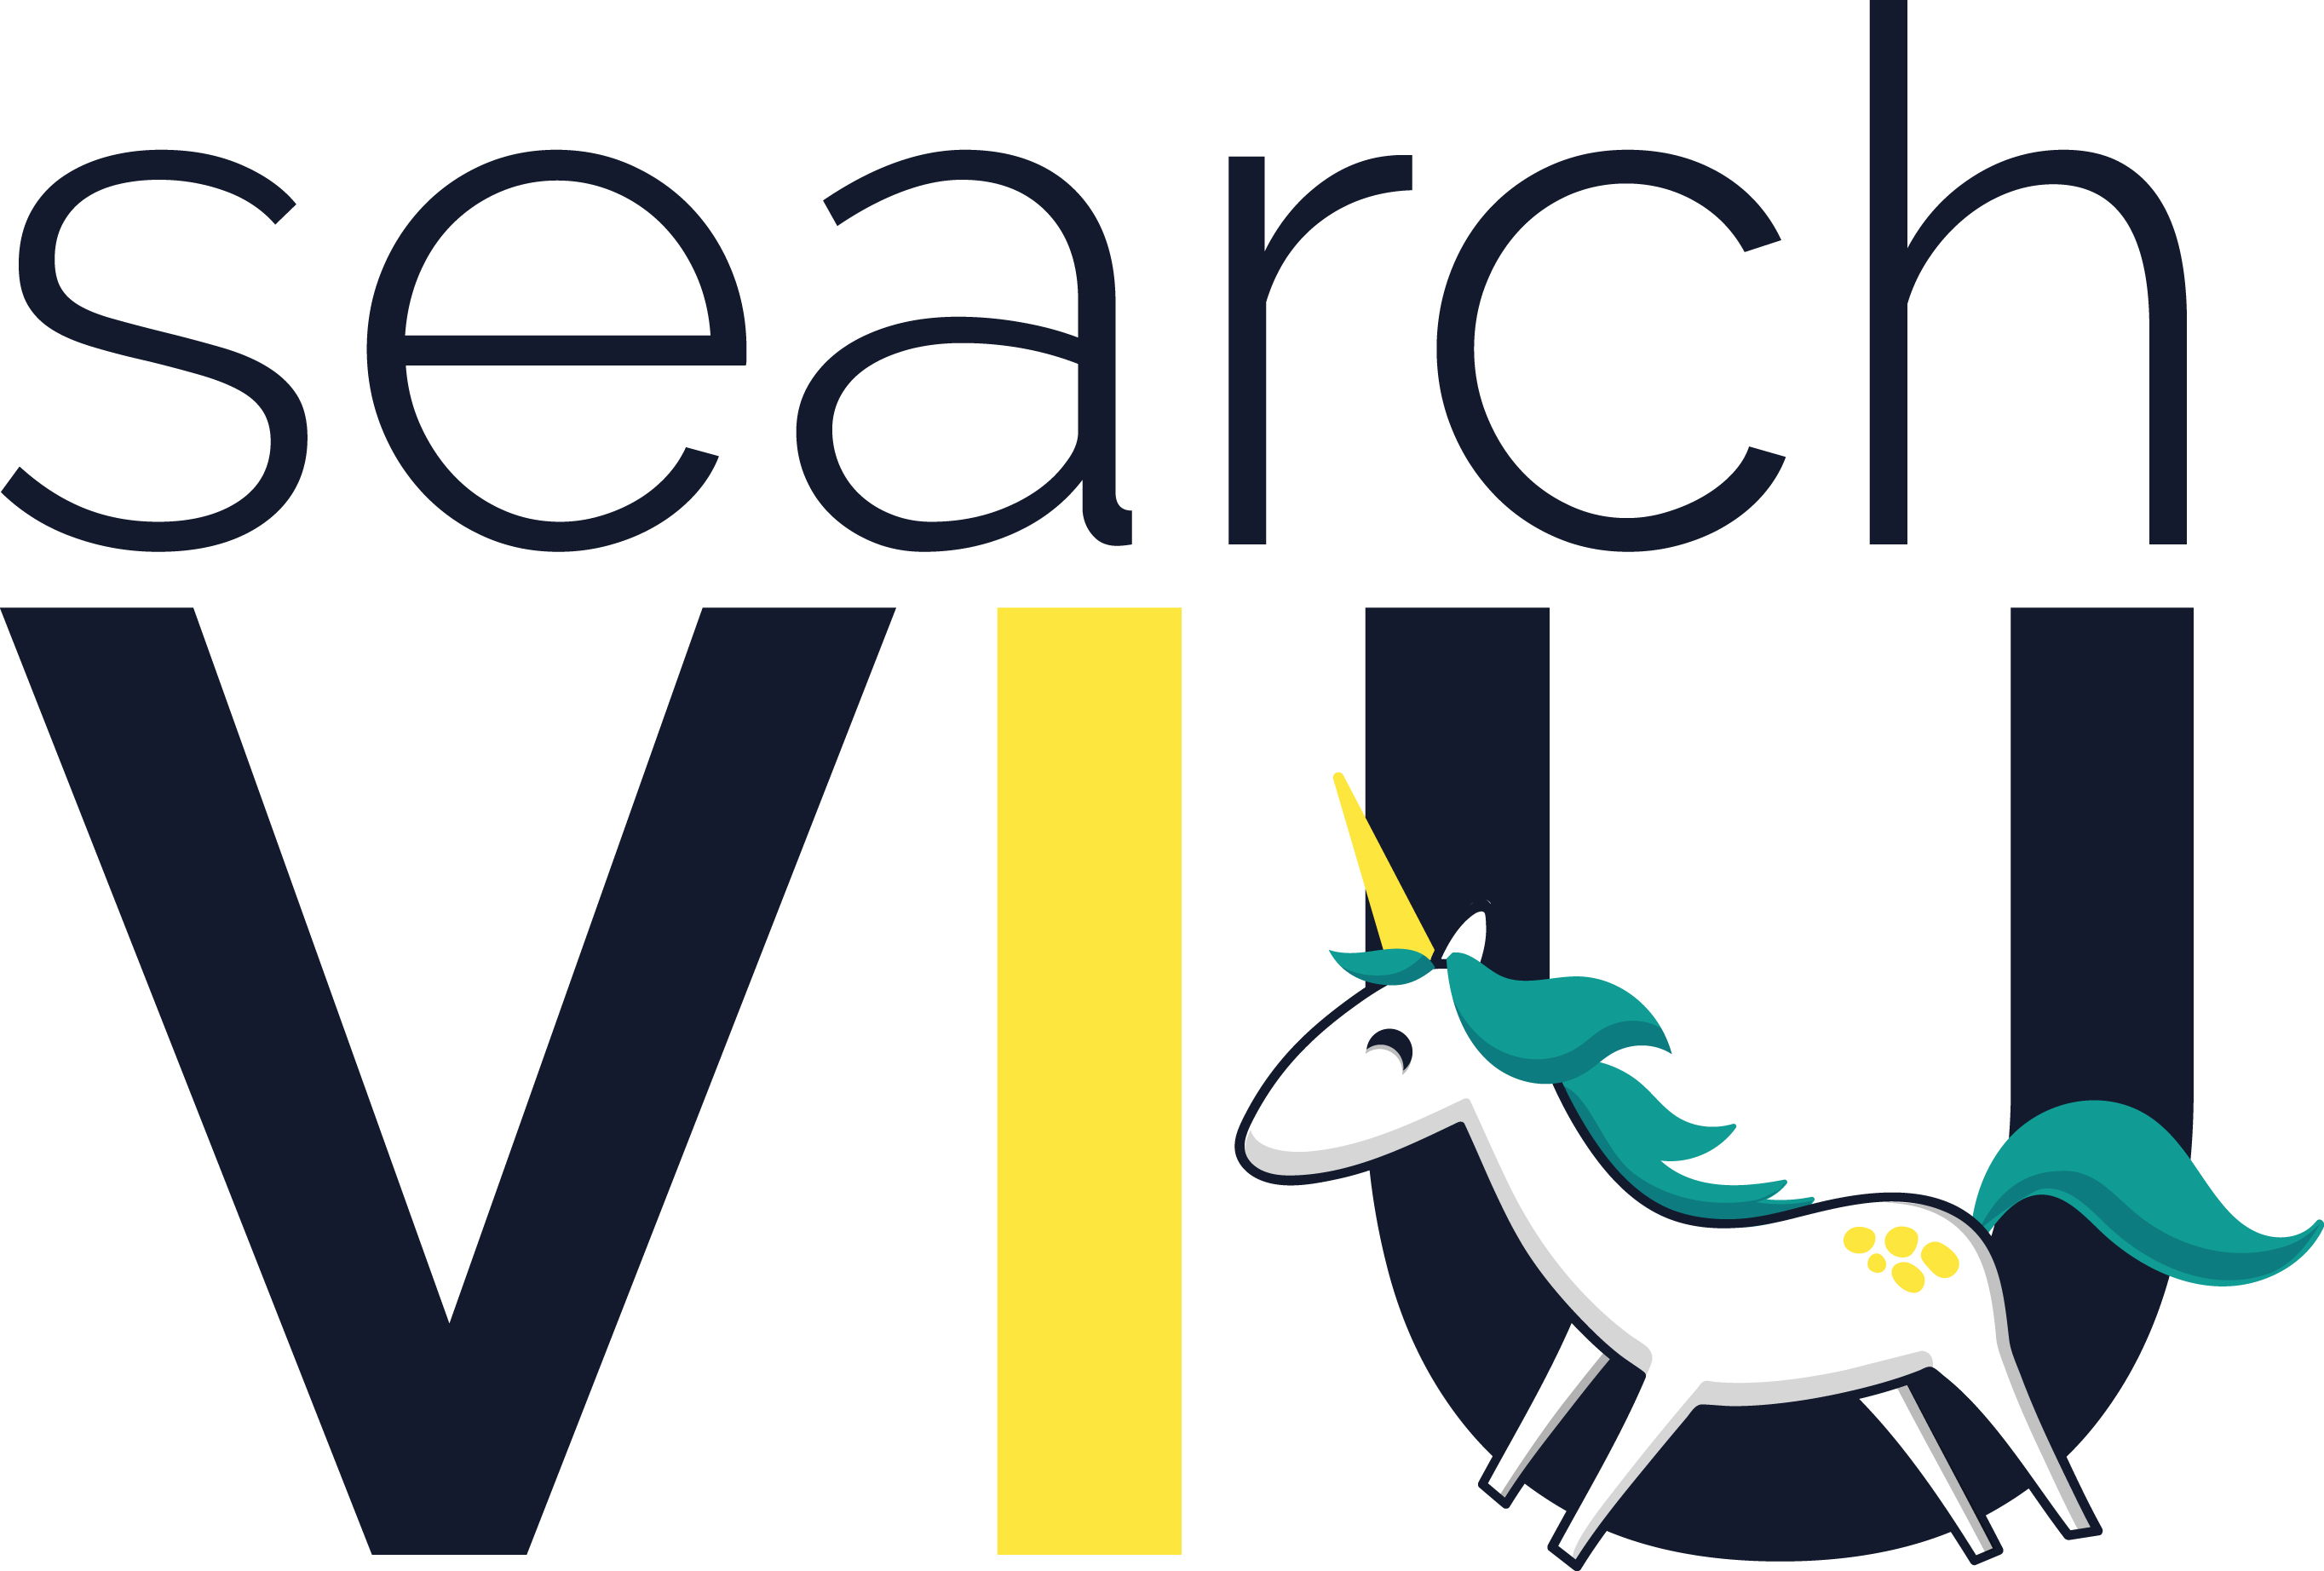 SEO-Tool searchVIU nominiert für Suchmarketing-Preis